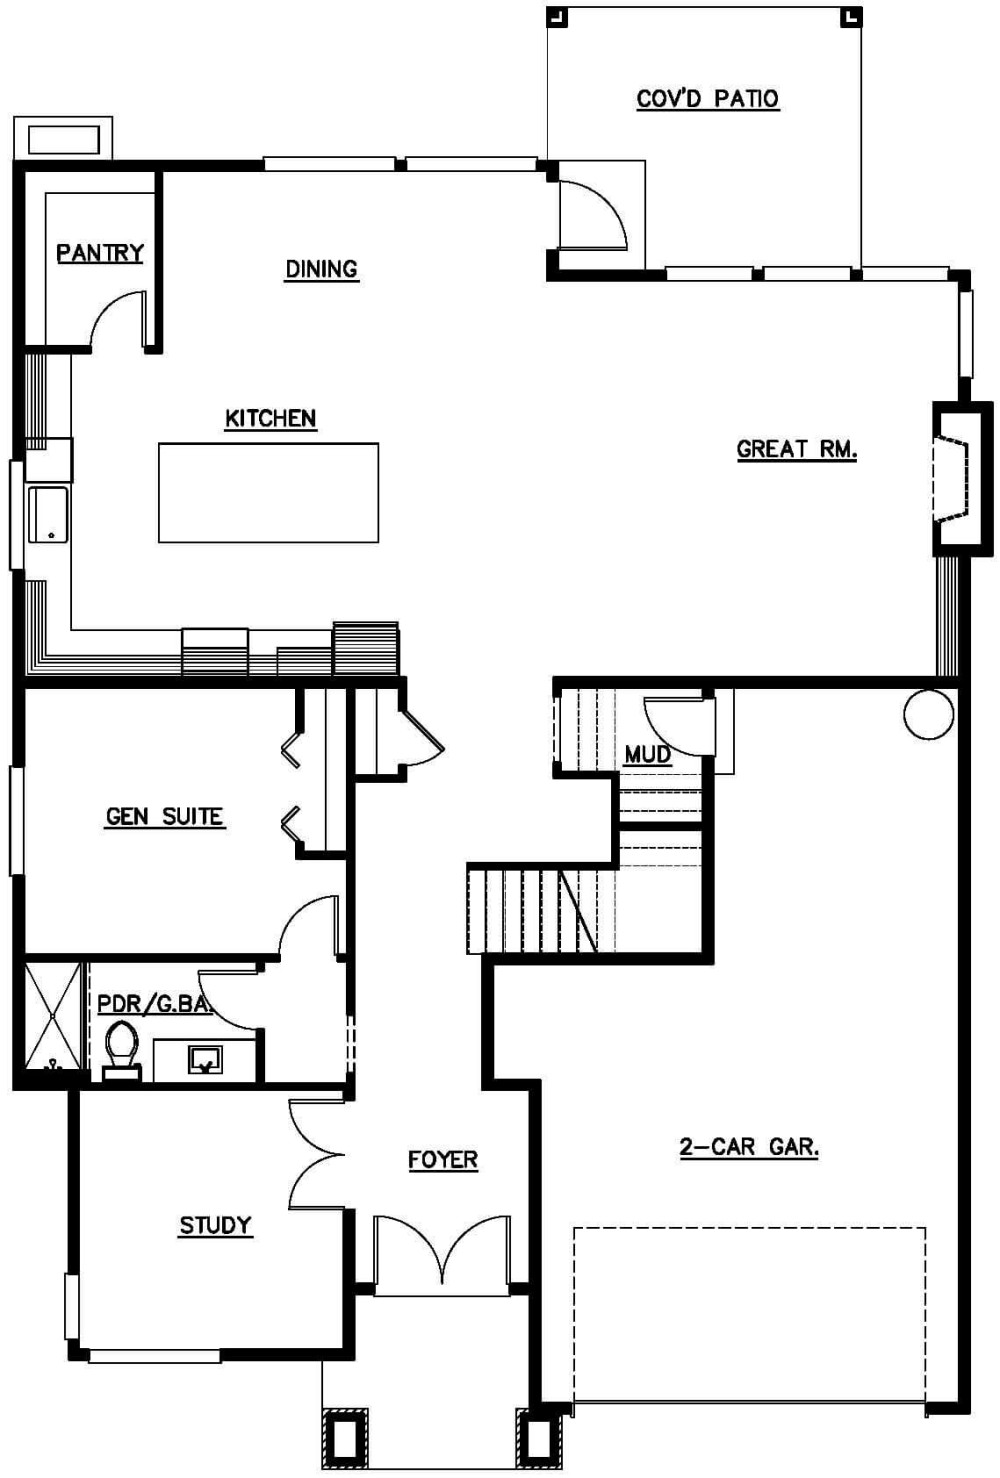 Main Floor floorplan for the Eveleigh - Lot 7 home